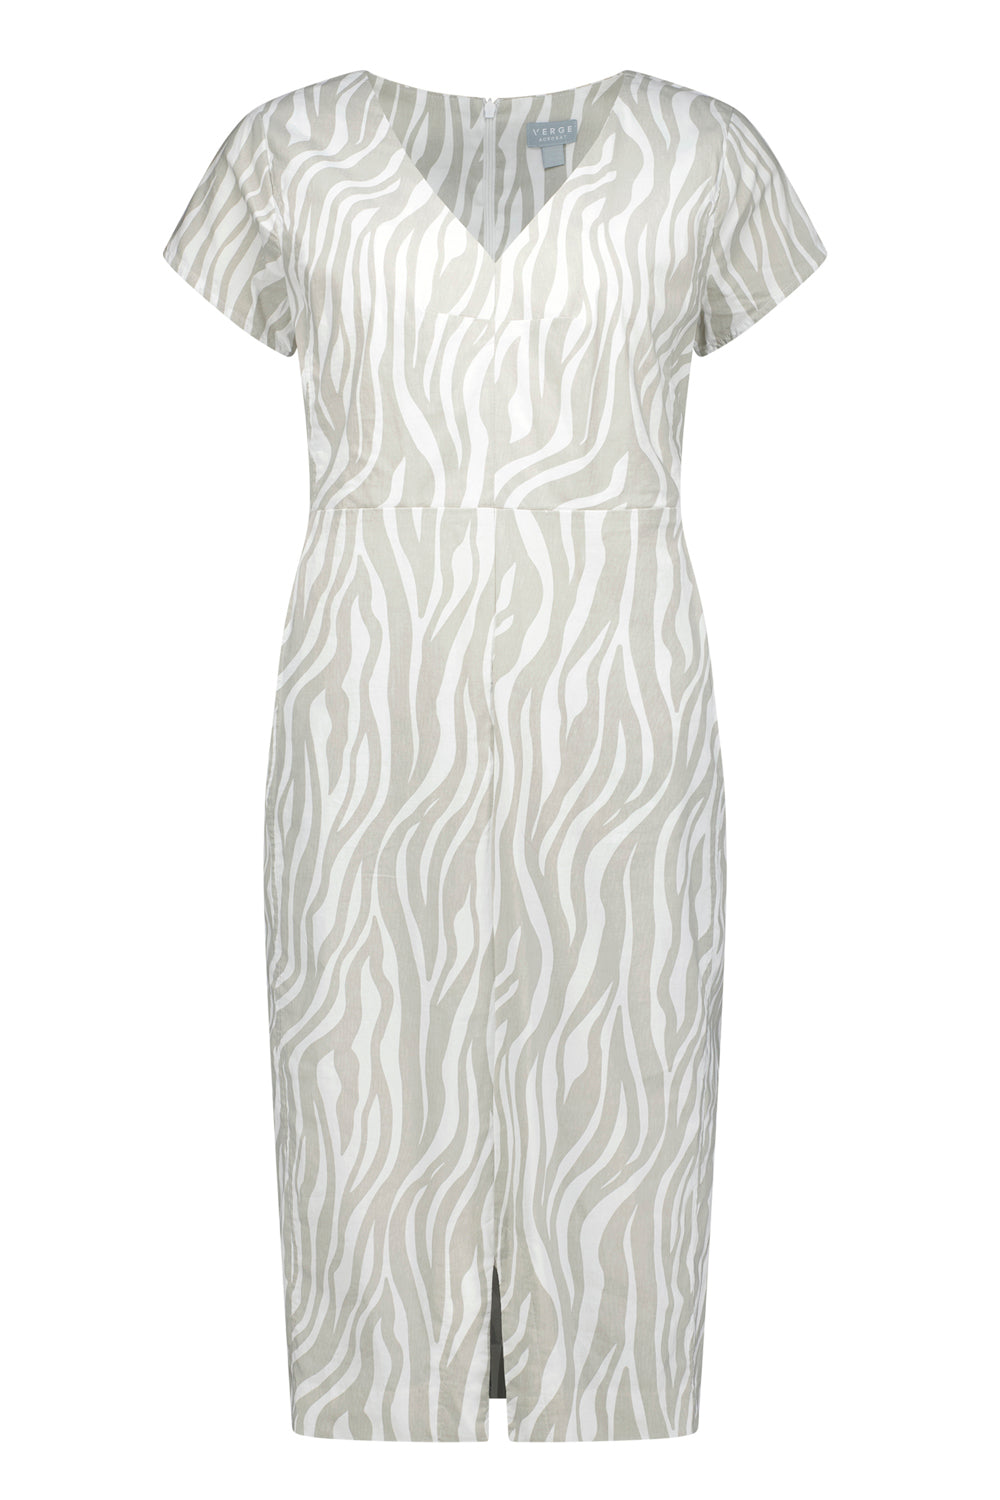 Acrobat Zion Dress - Pumice - Dress VERGE